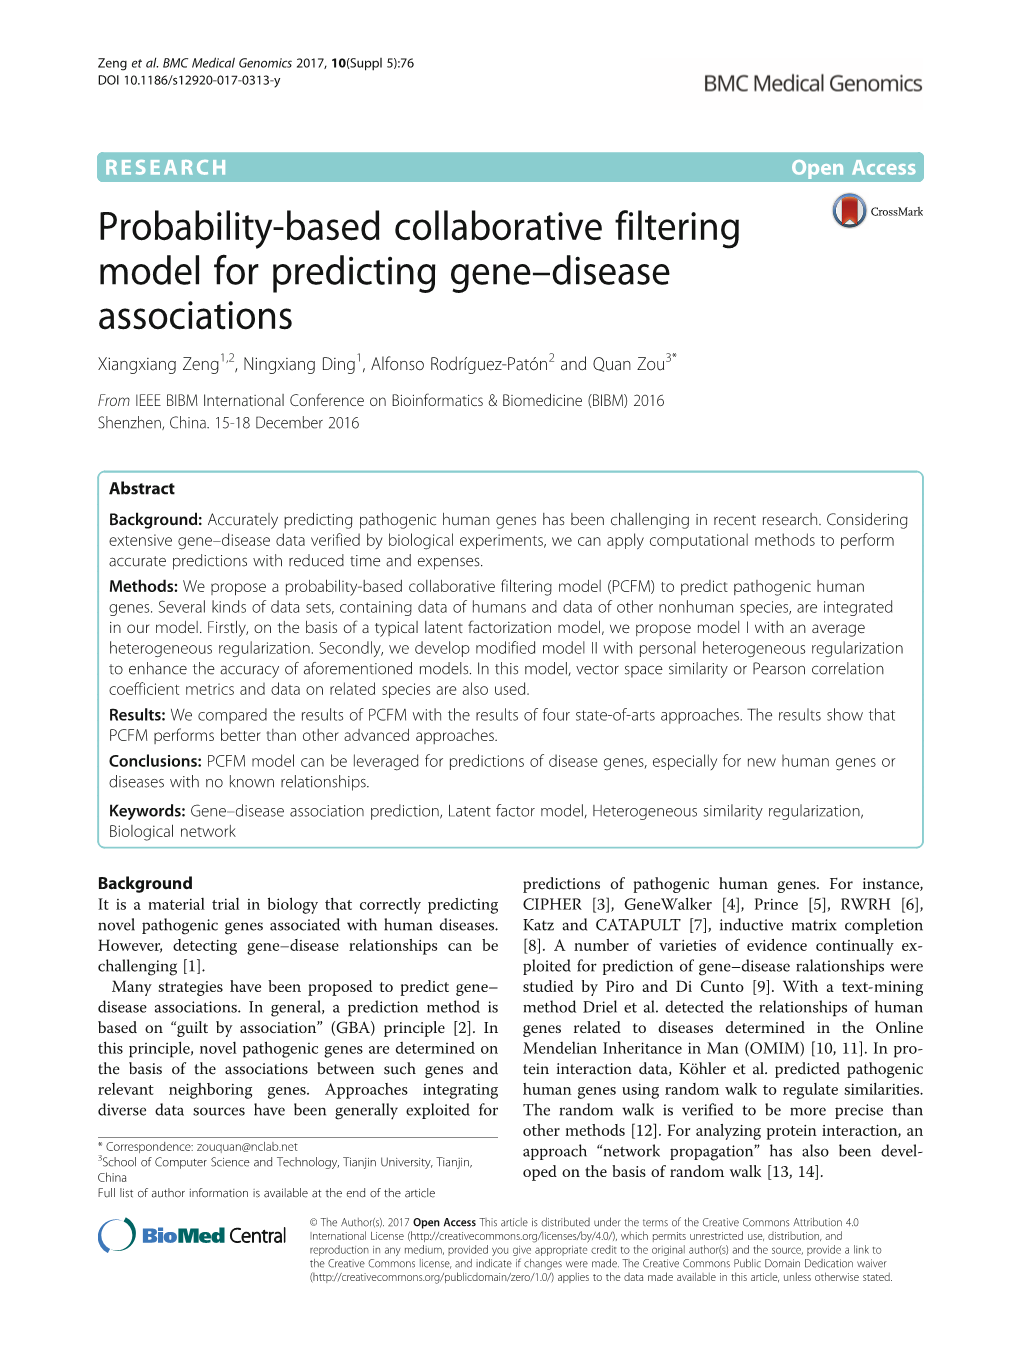 Probability-Based Collaborative Filtering Model for Predicting Gene–Disease Associations Xiangxiang Zeng1,2, Ningxiang Ding1, Alfonso Rodríguez-Patón2 and Quan Zou3*